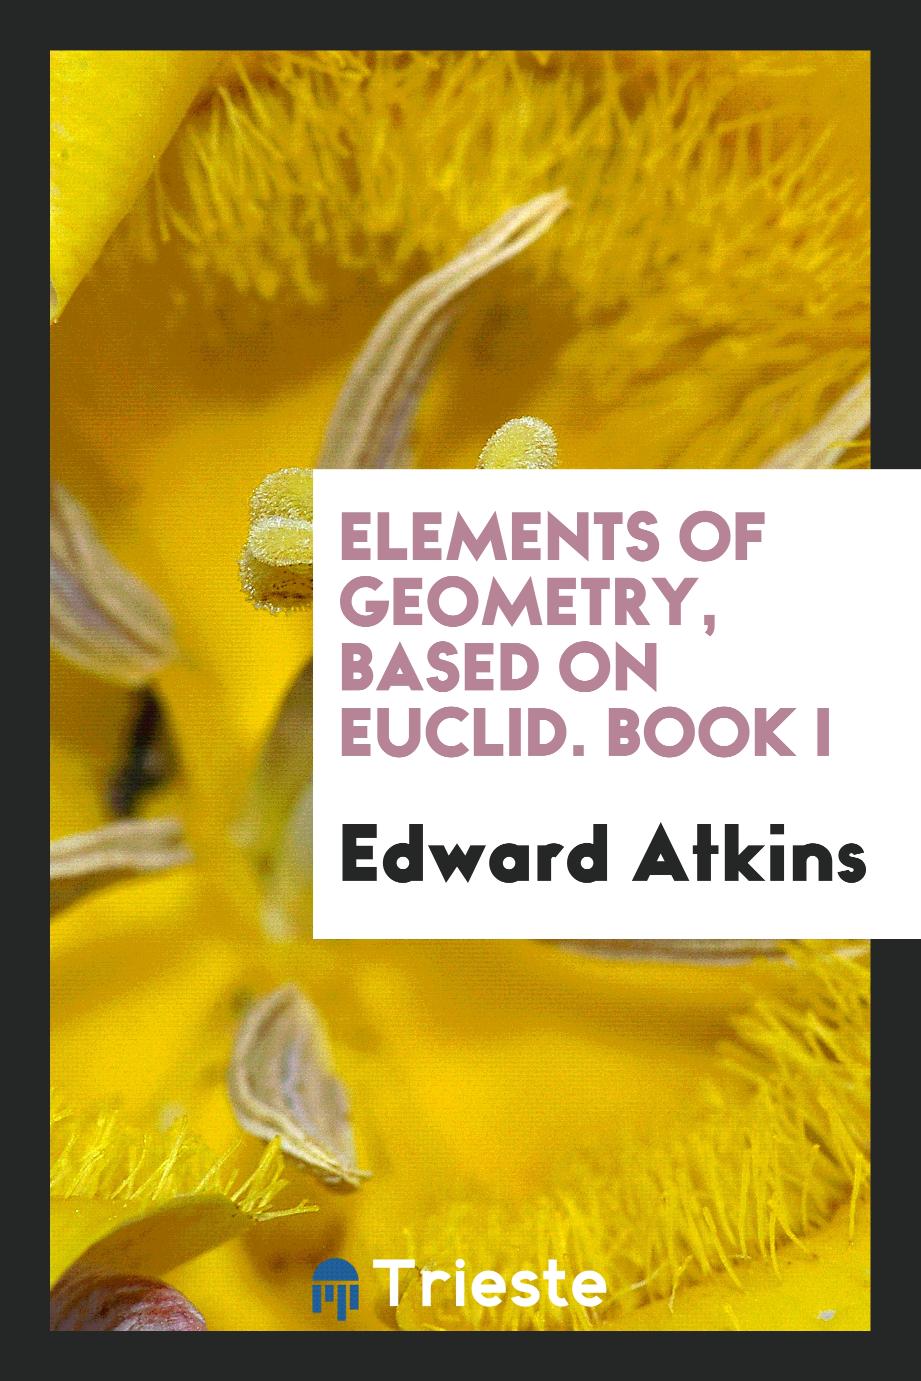 Elements of geometry, based on Euclid. Book I